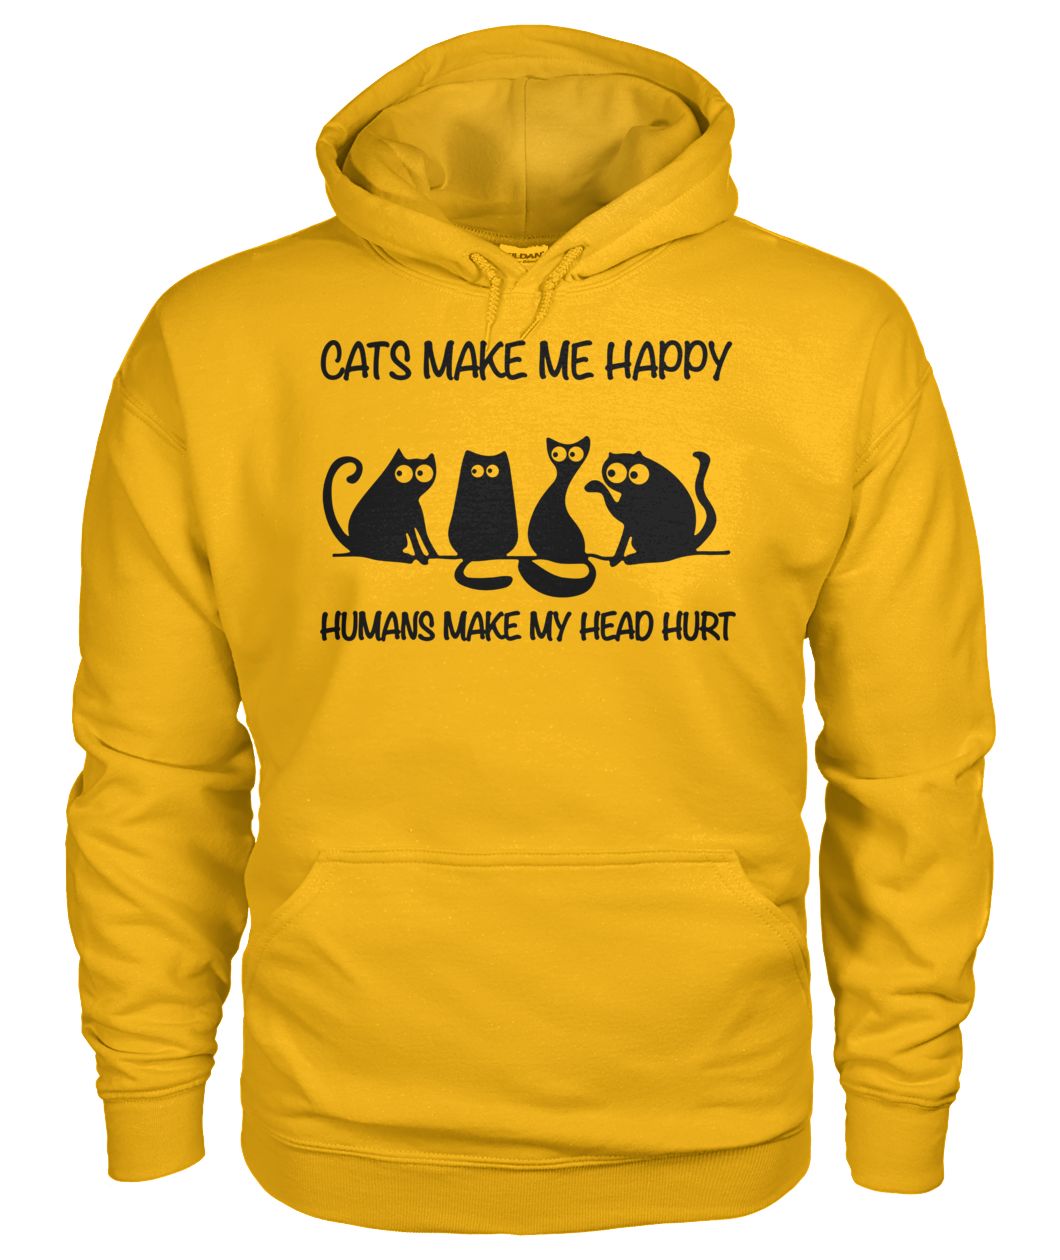 Cats make me happy humans make my head hurt gildan hoodie